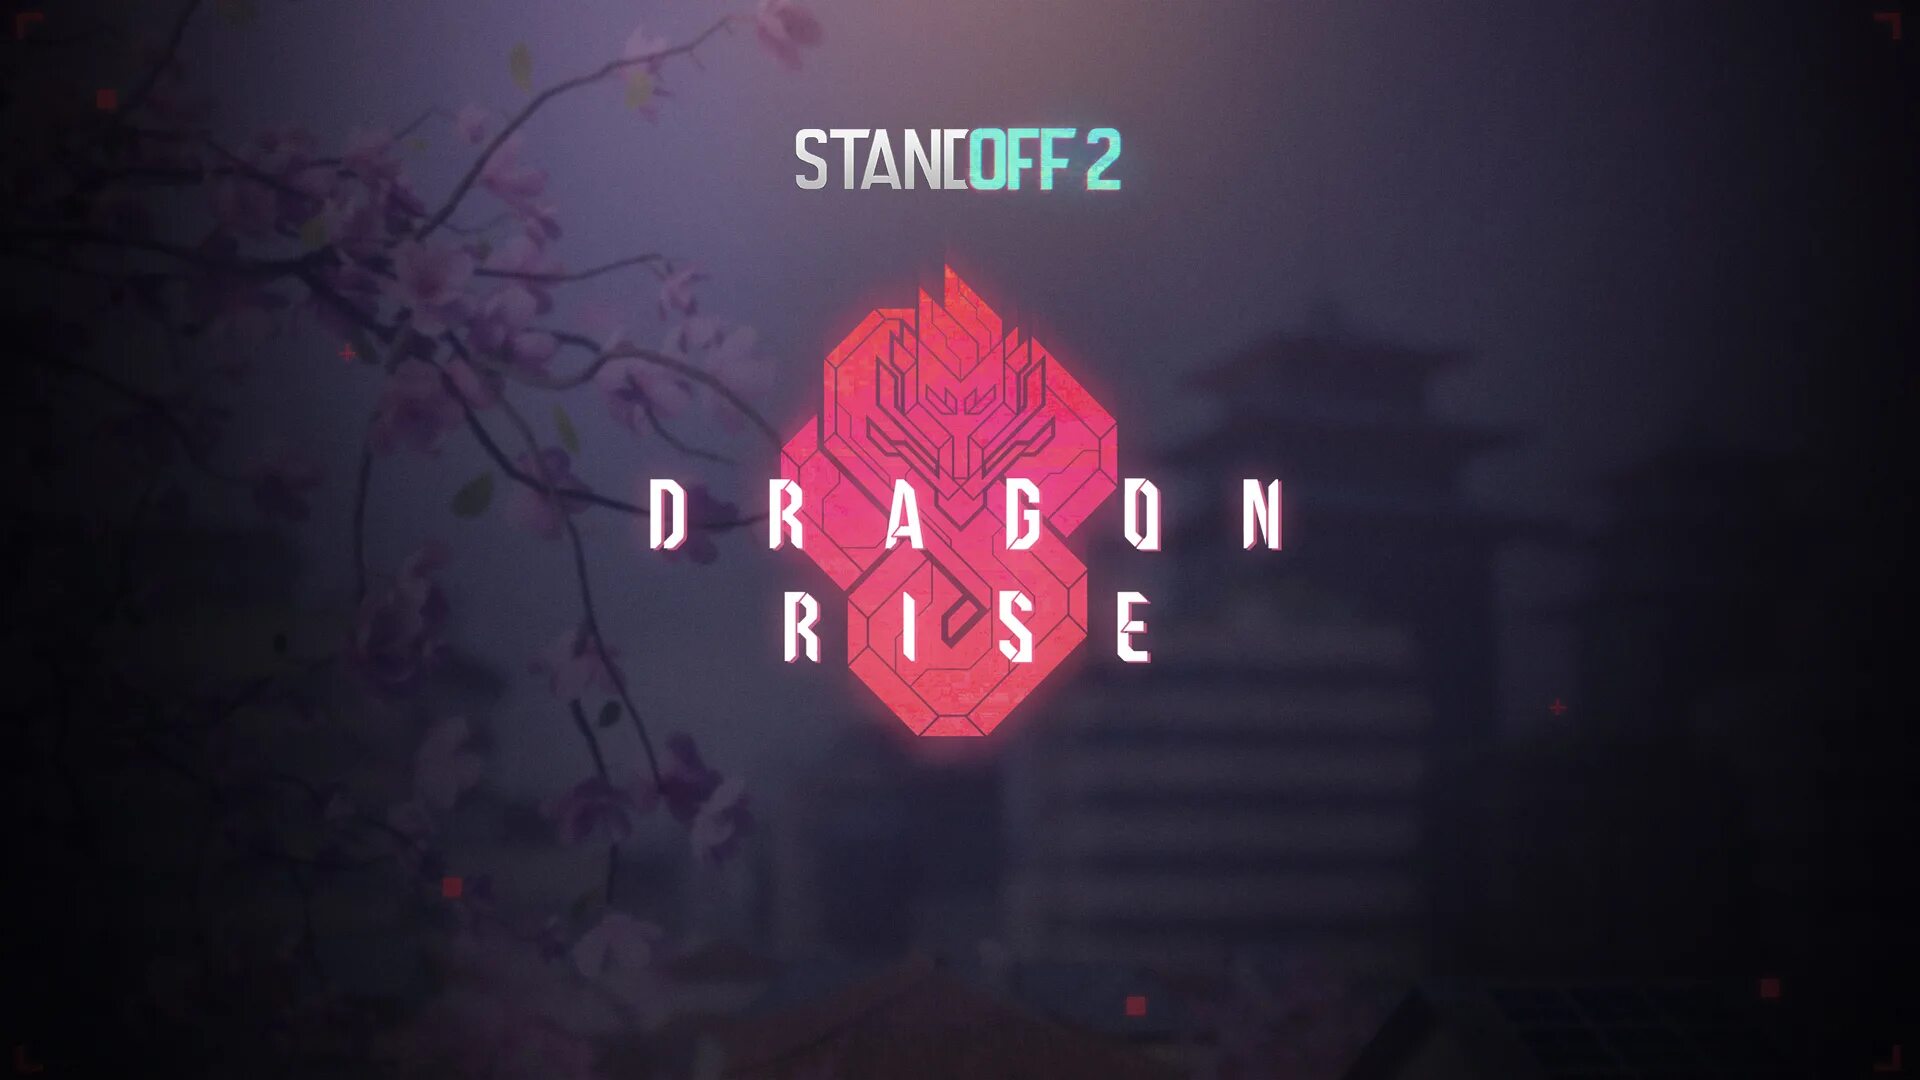 Медали Standoff 2 Dragon Rise. Стандофф 0.23.0. Dragon Rise Standoff 2.